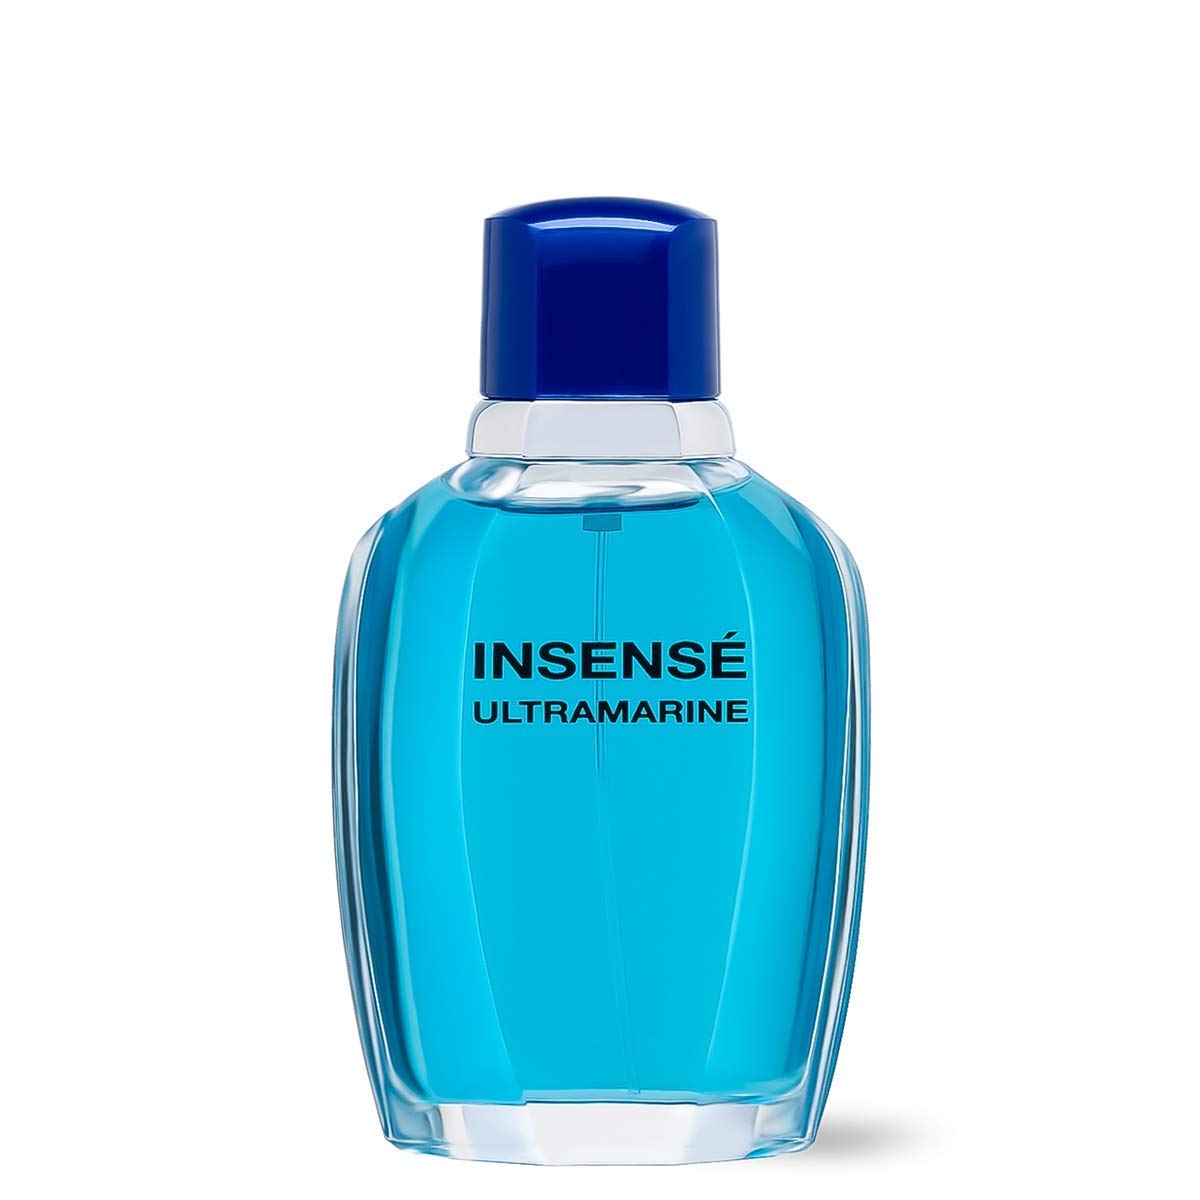 Givenchy Insense Ultramarine Eau de Toilette (100 ml) Beautiful